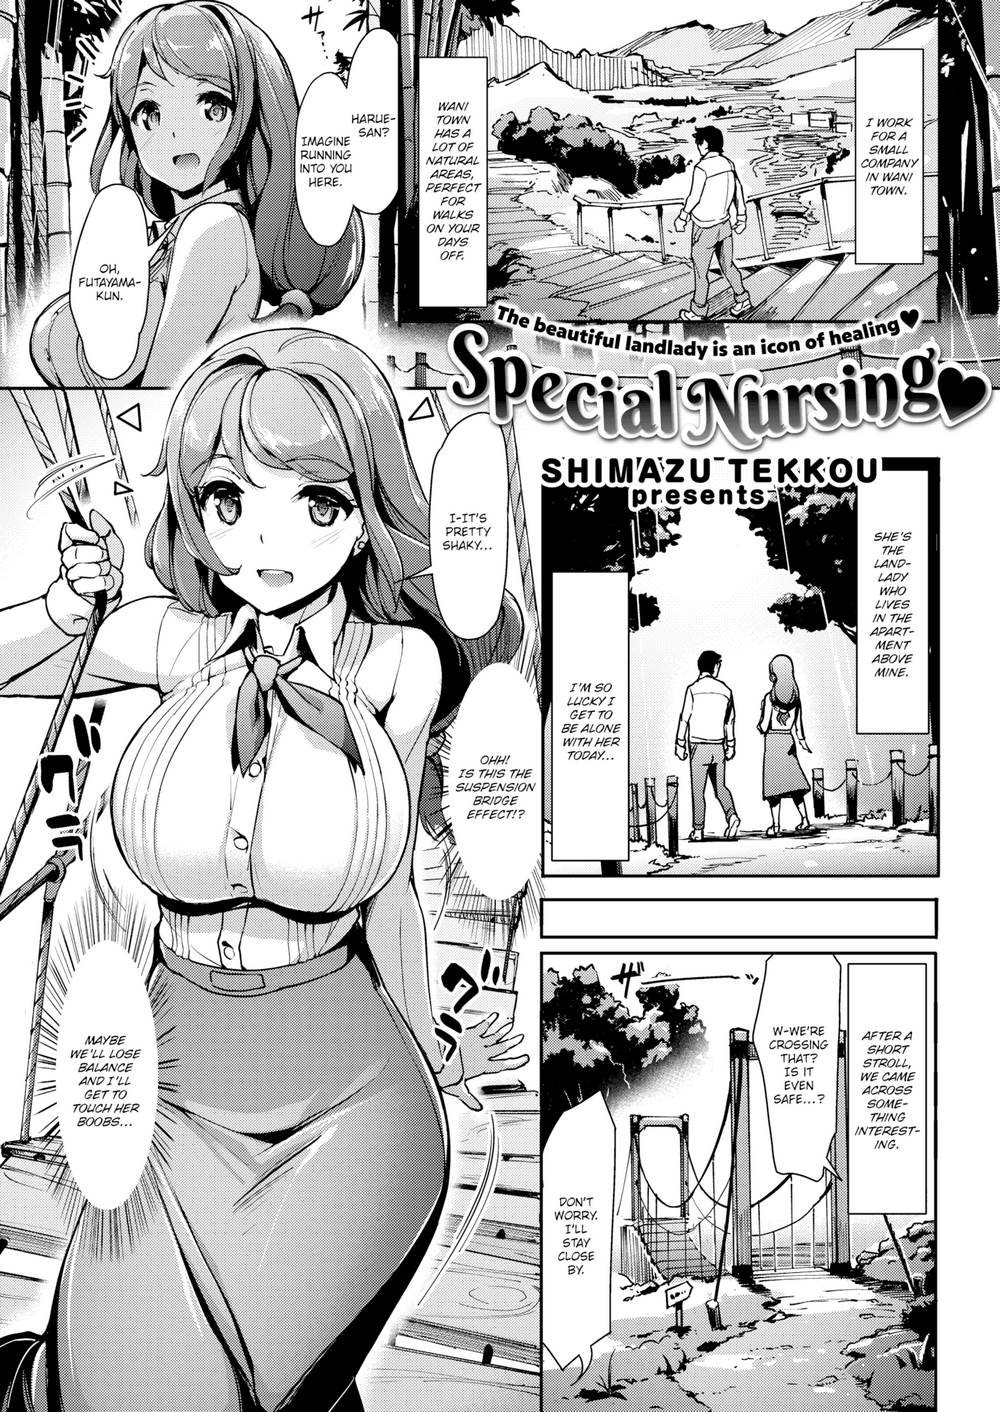 Special nursing shimazu tekko